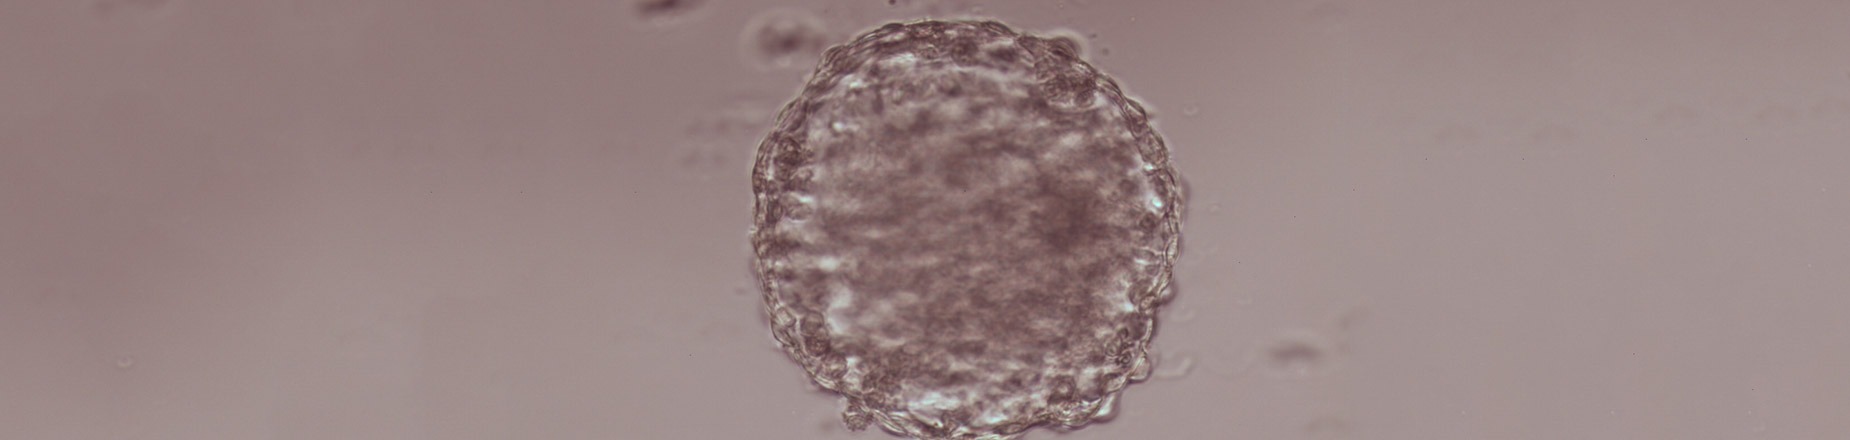 Embryotransfer